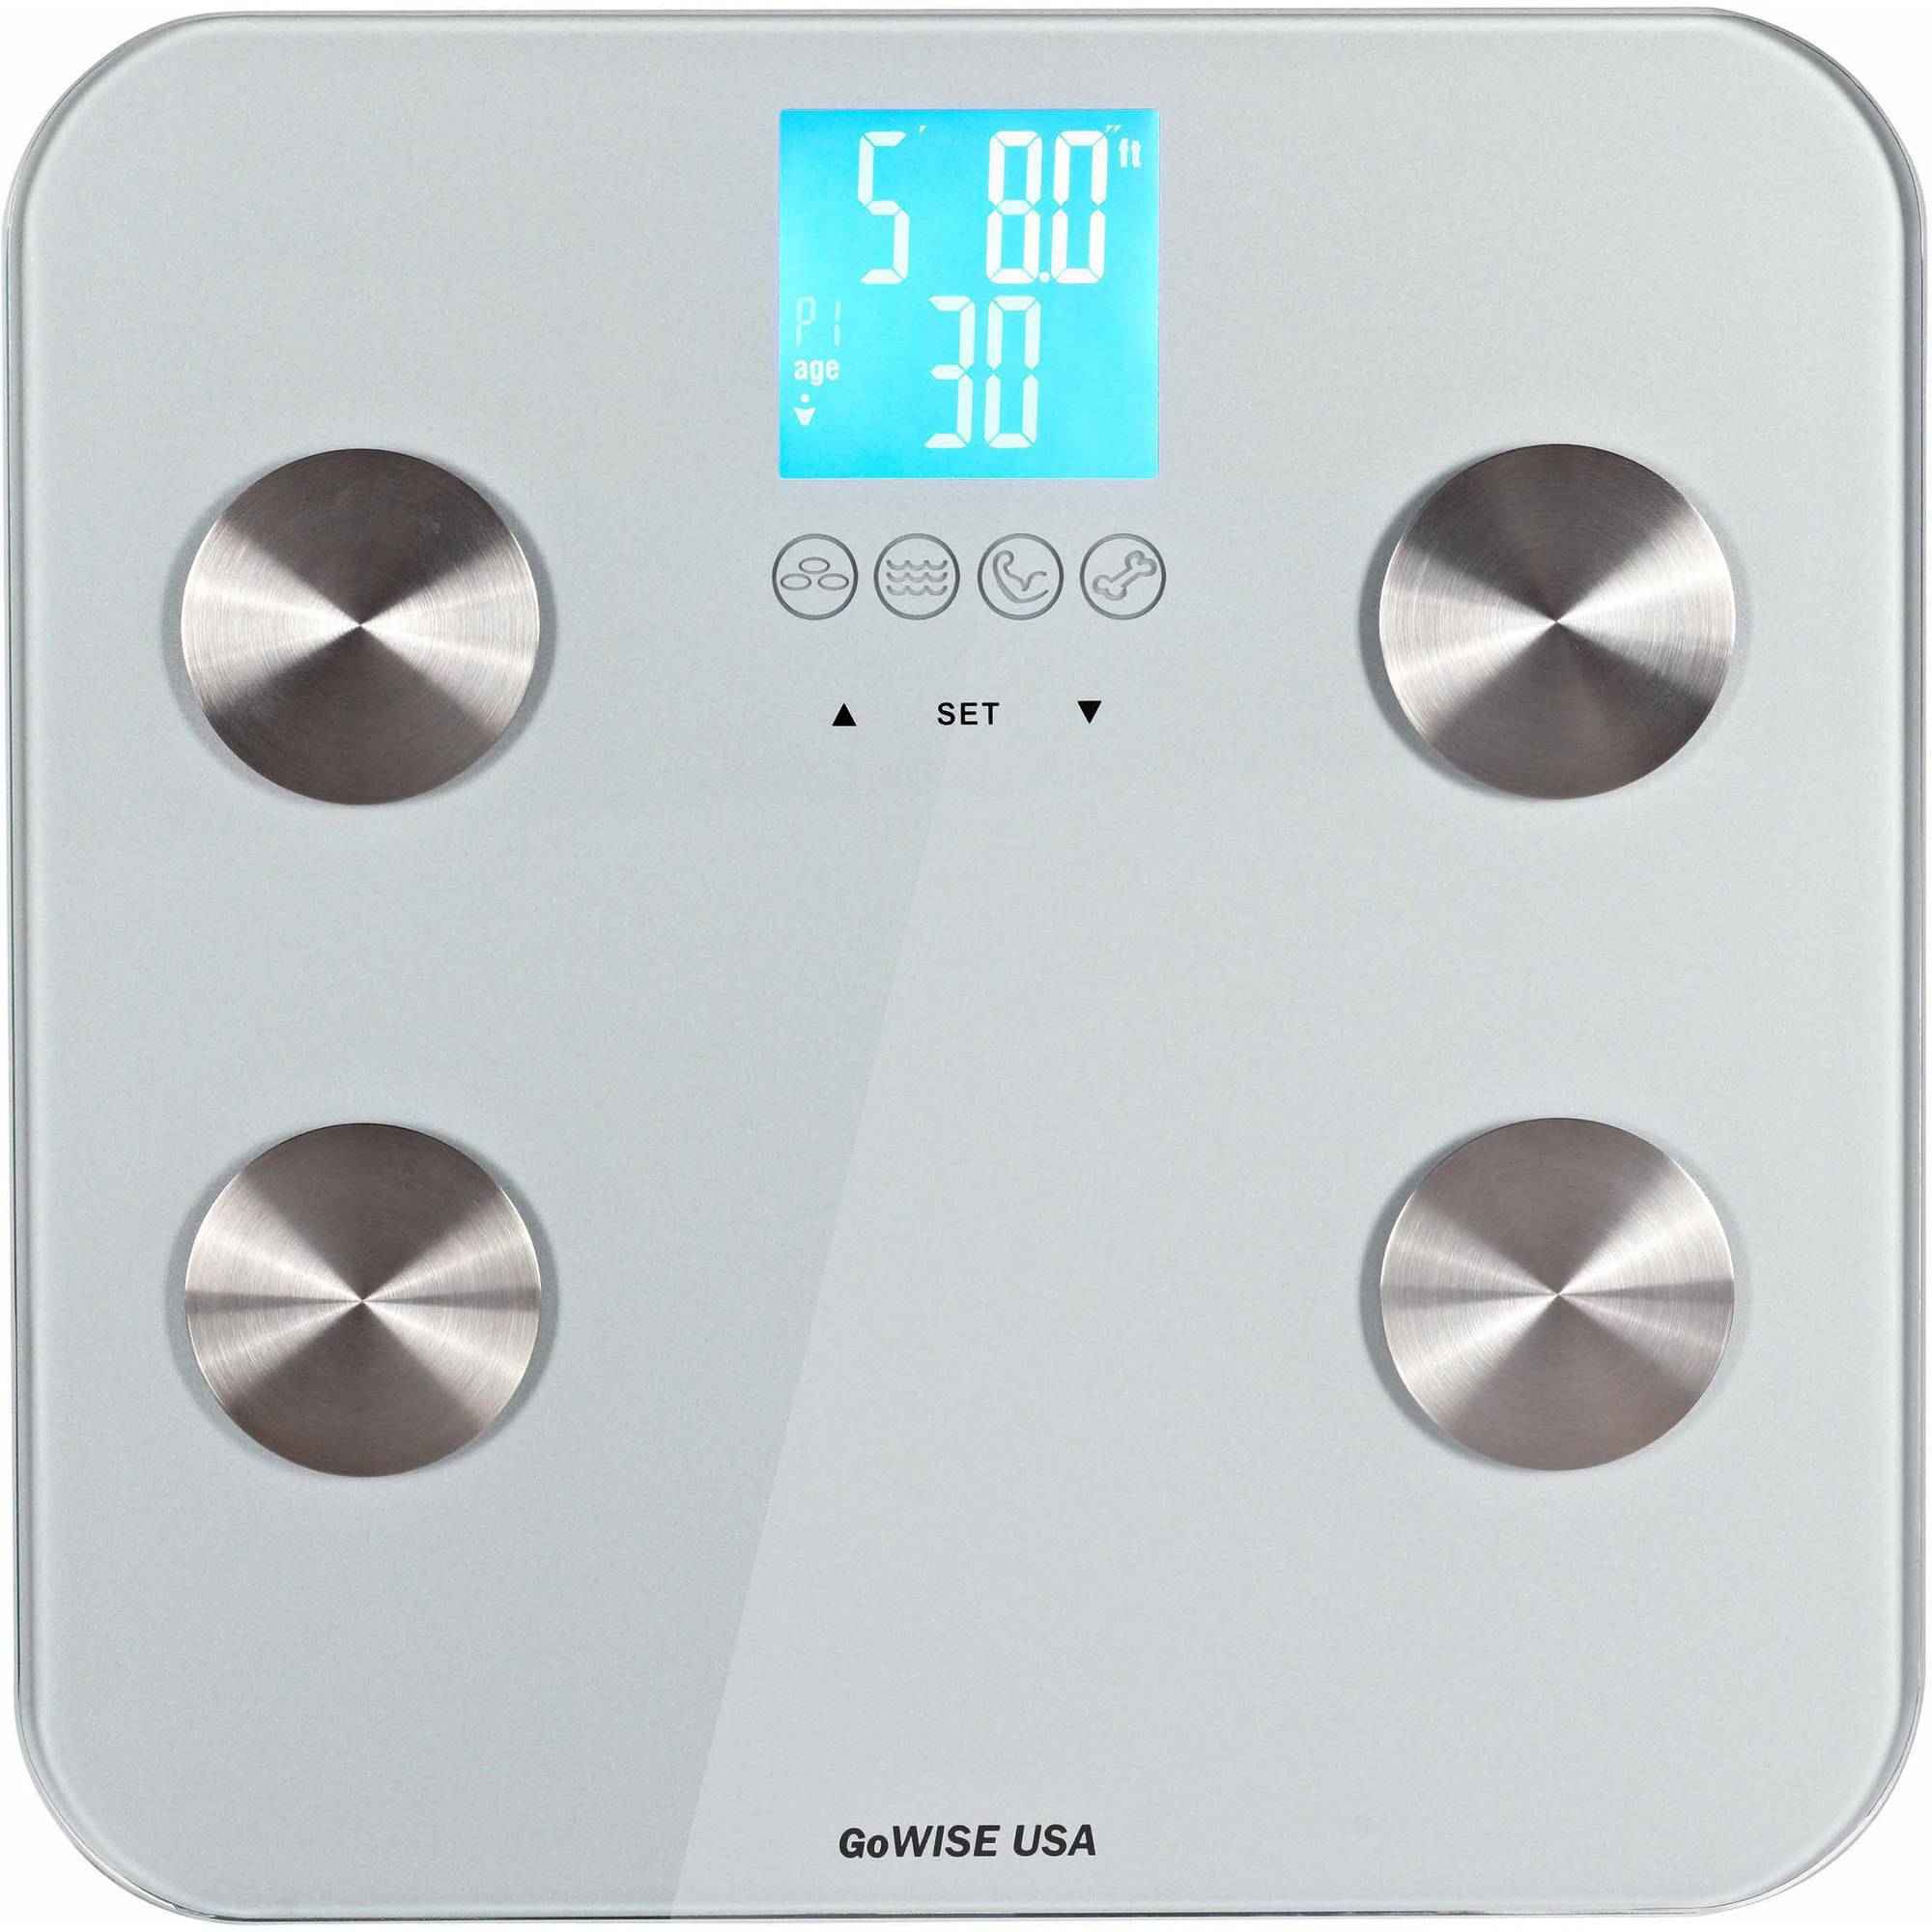 GoWISE USA Slim Digital Bathroom Scale, Silver - image 2 of 4